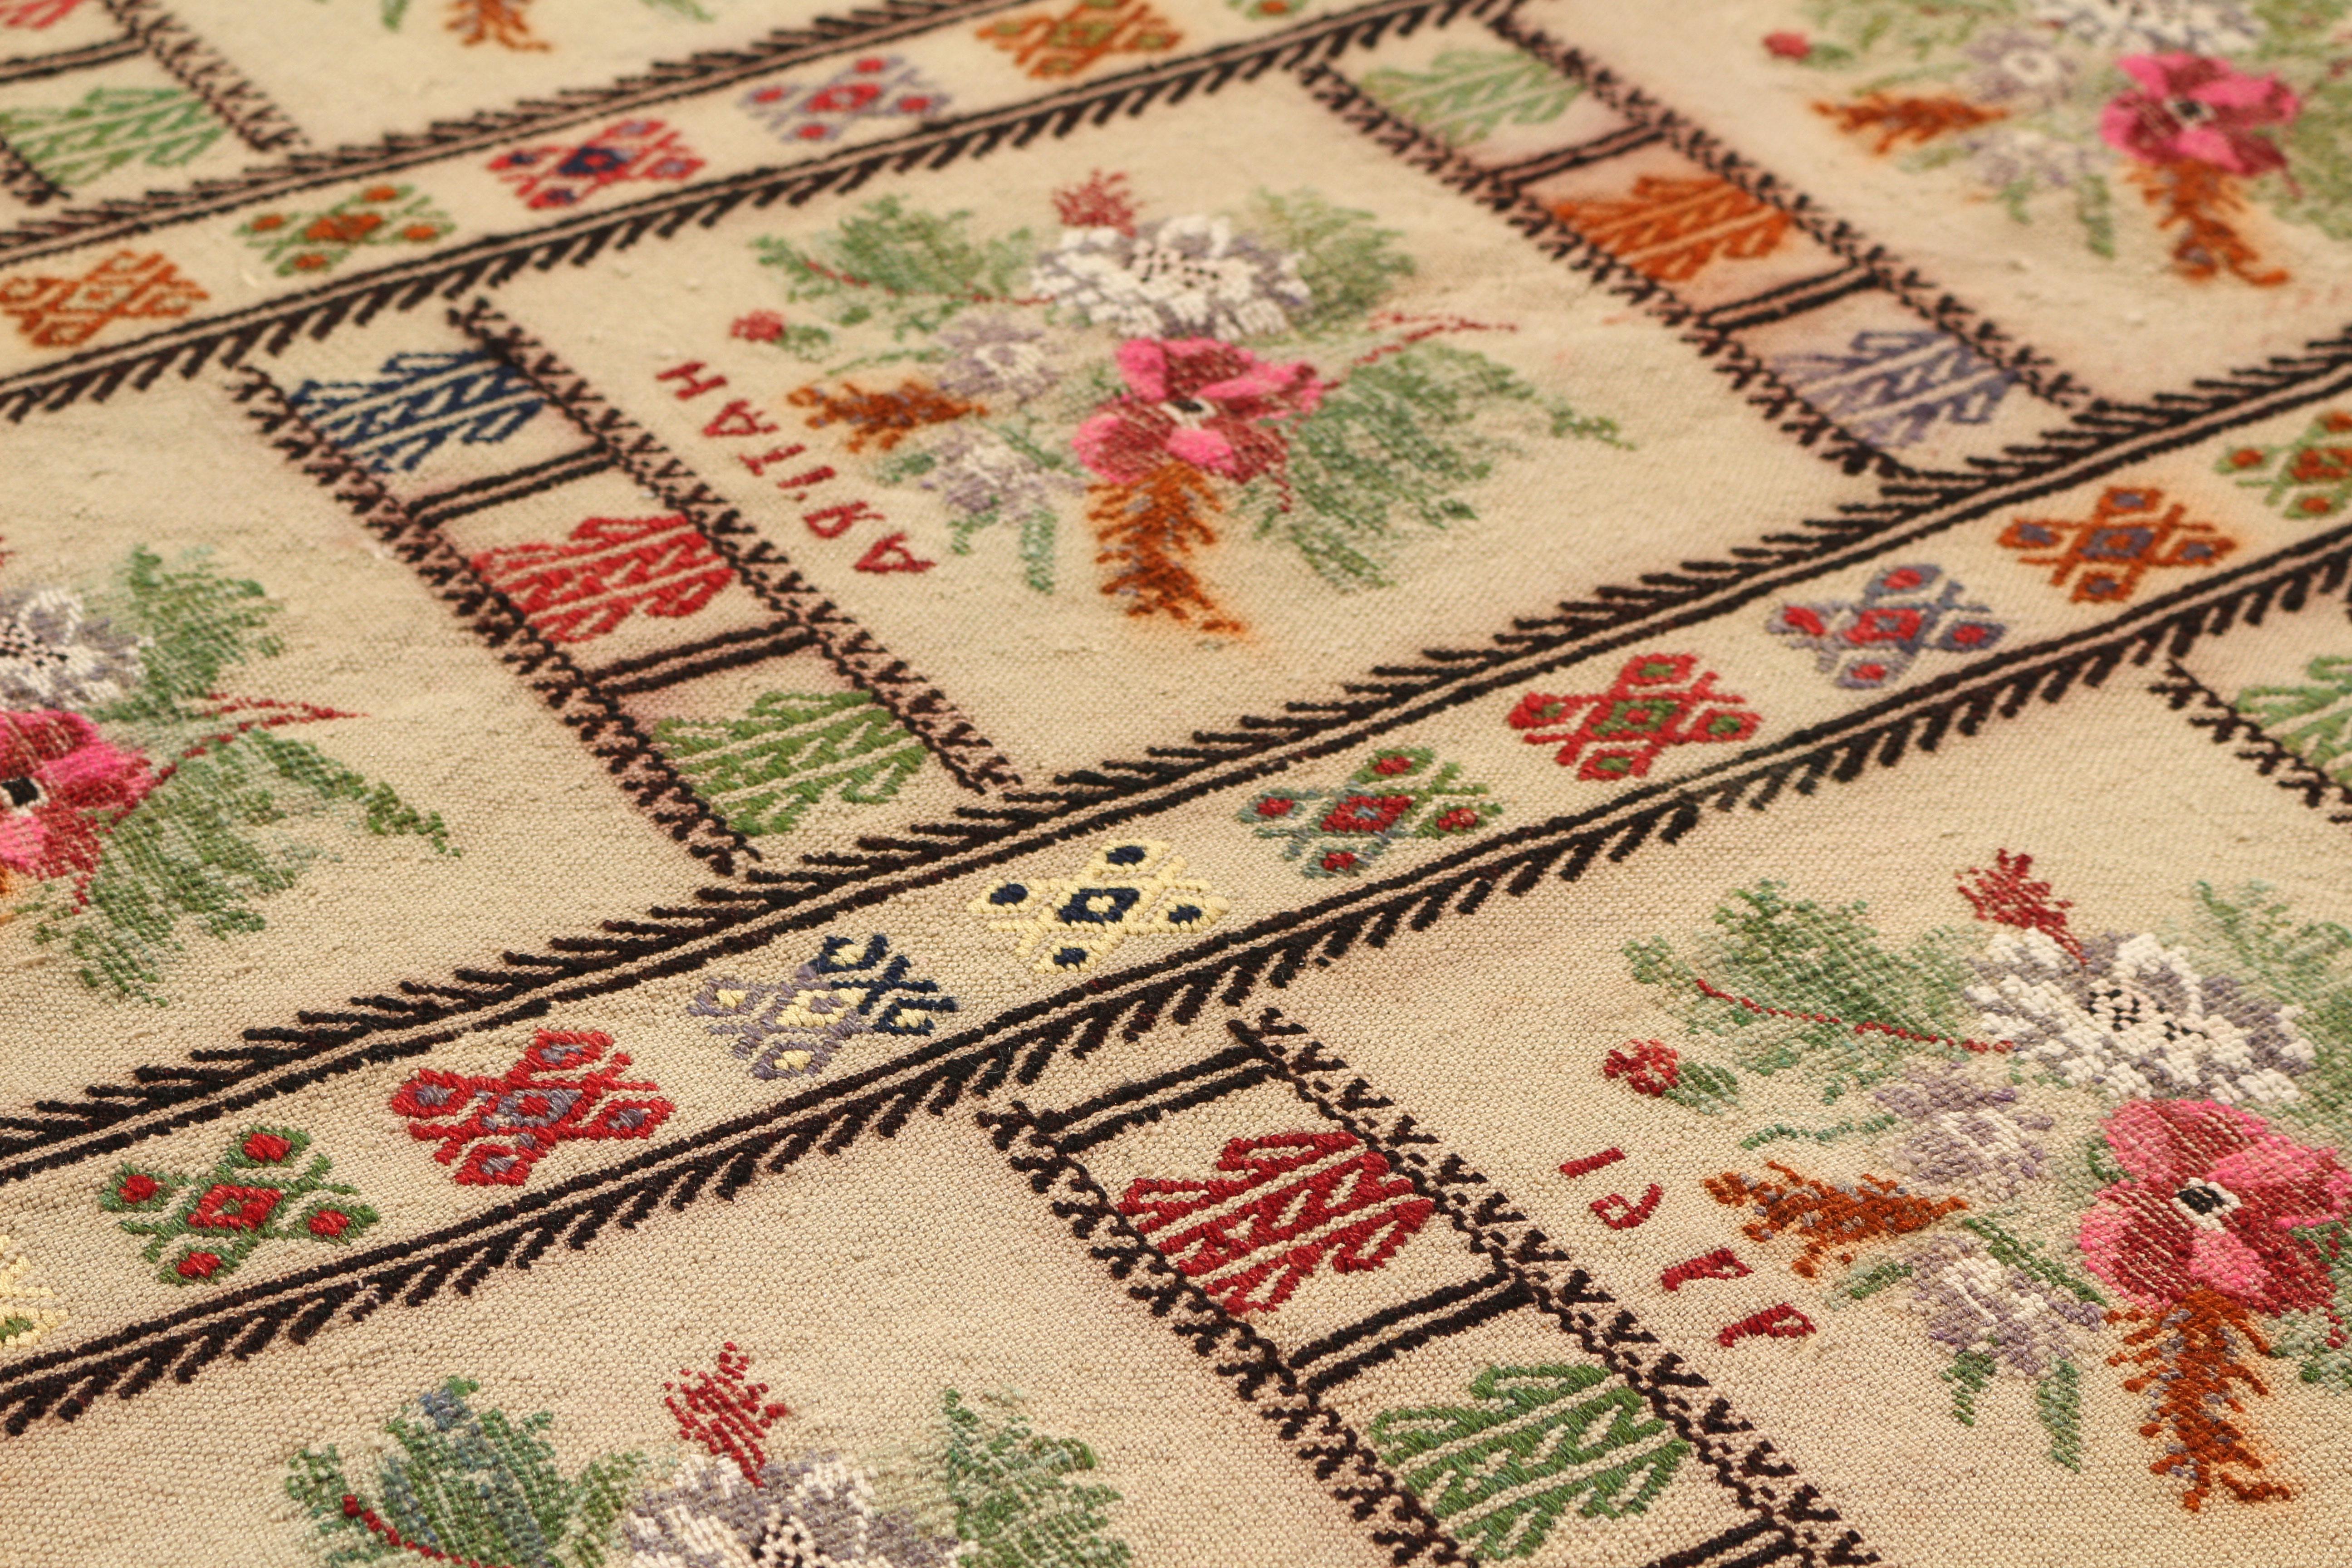 Tribal Rare Vintage Kilim In Beige-Brown With Multicolor Floral Patterns By Rug & Kilim For Sale